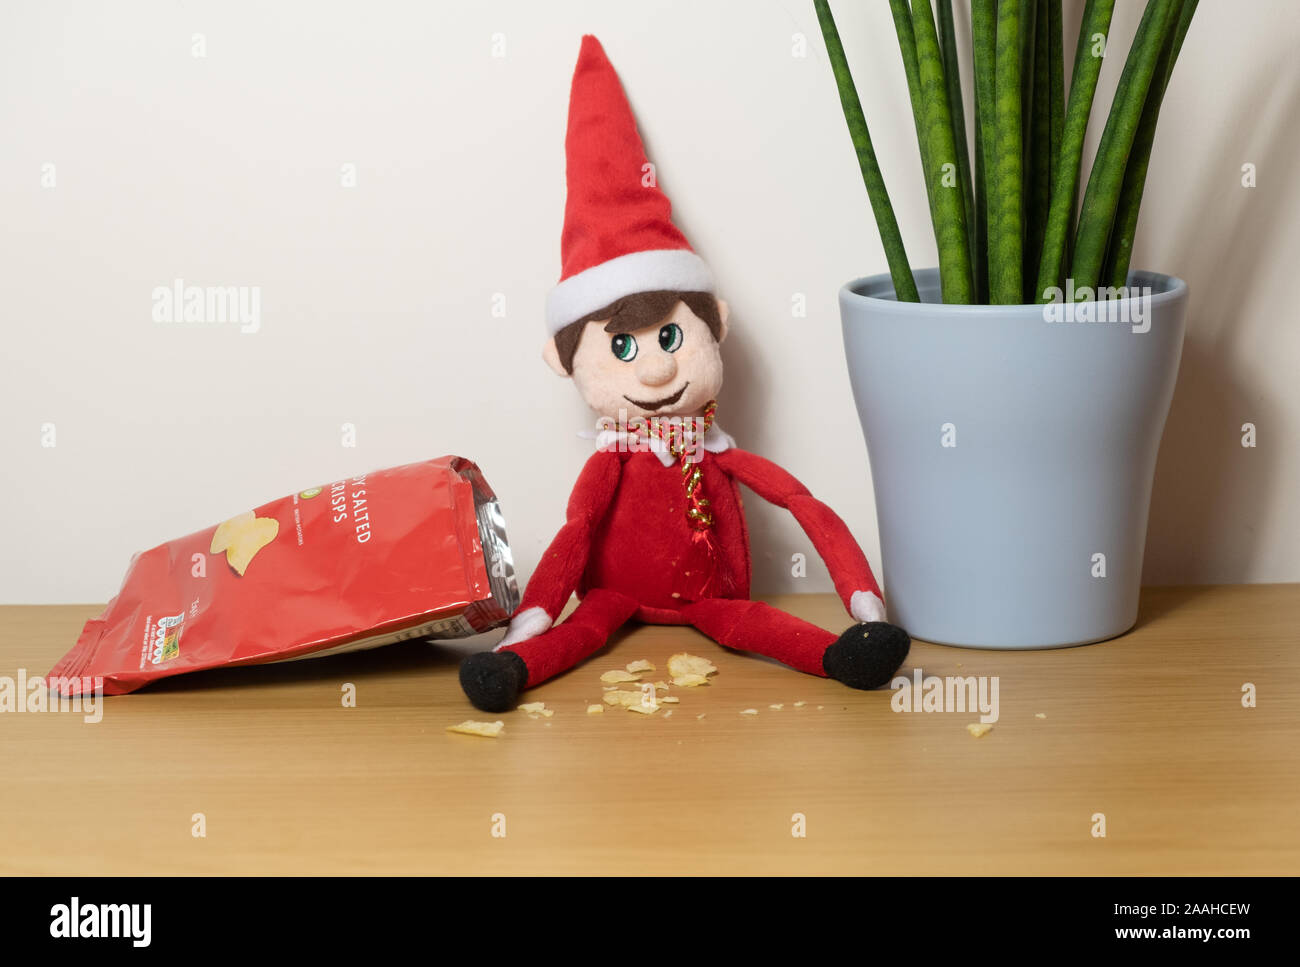 Christmas elf behaving badly, eating all the snacks and crisps. Stock Photo